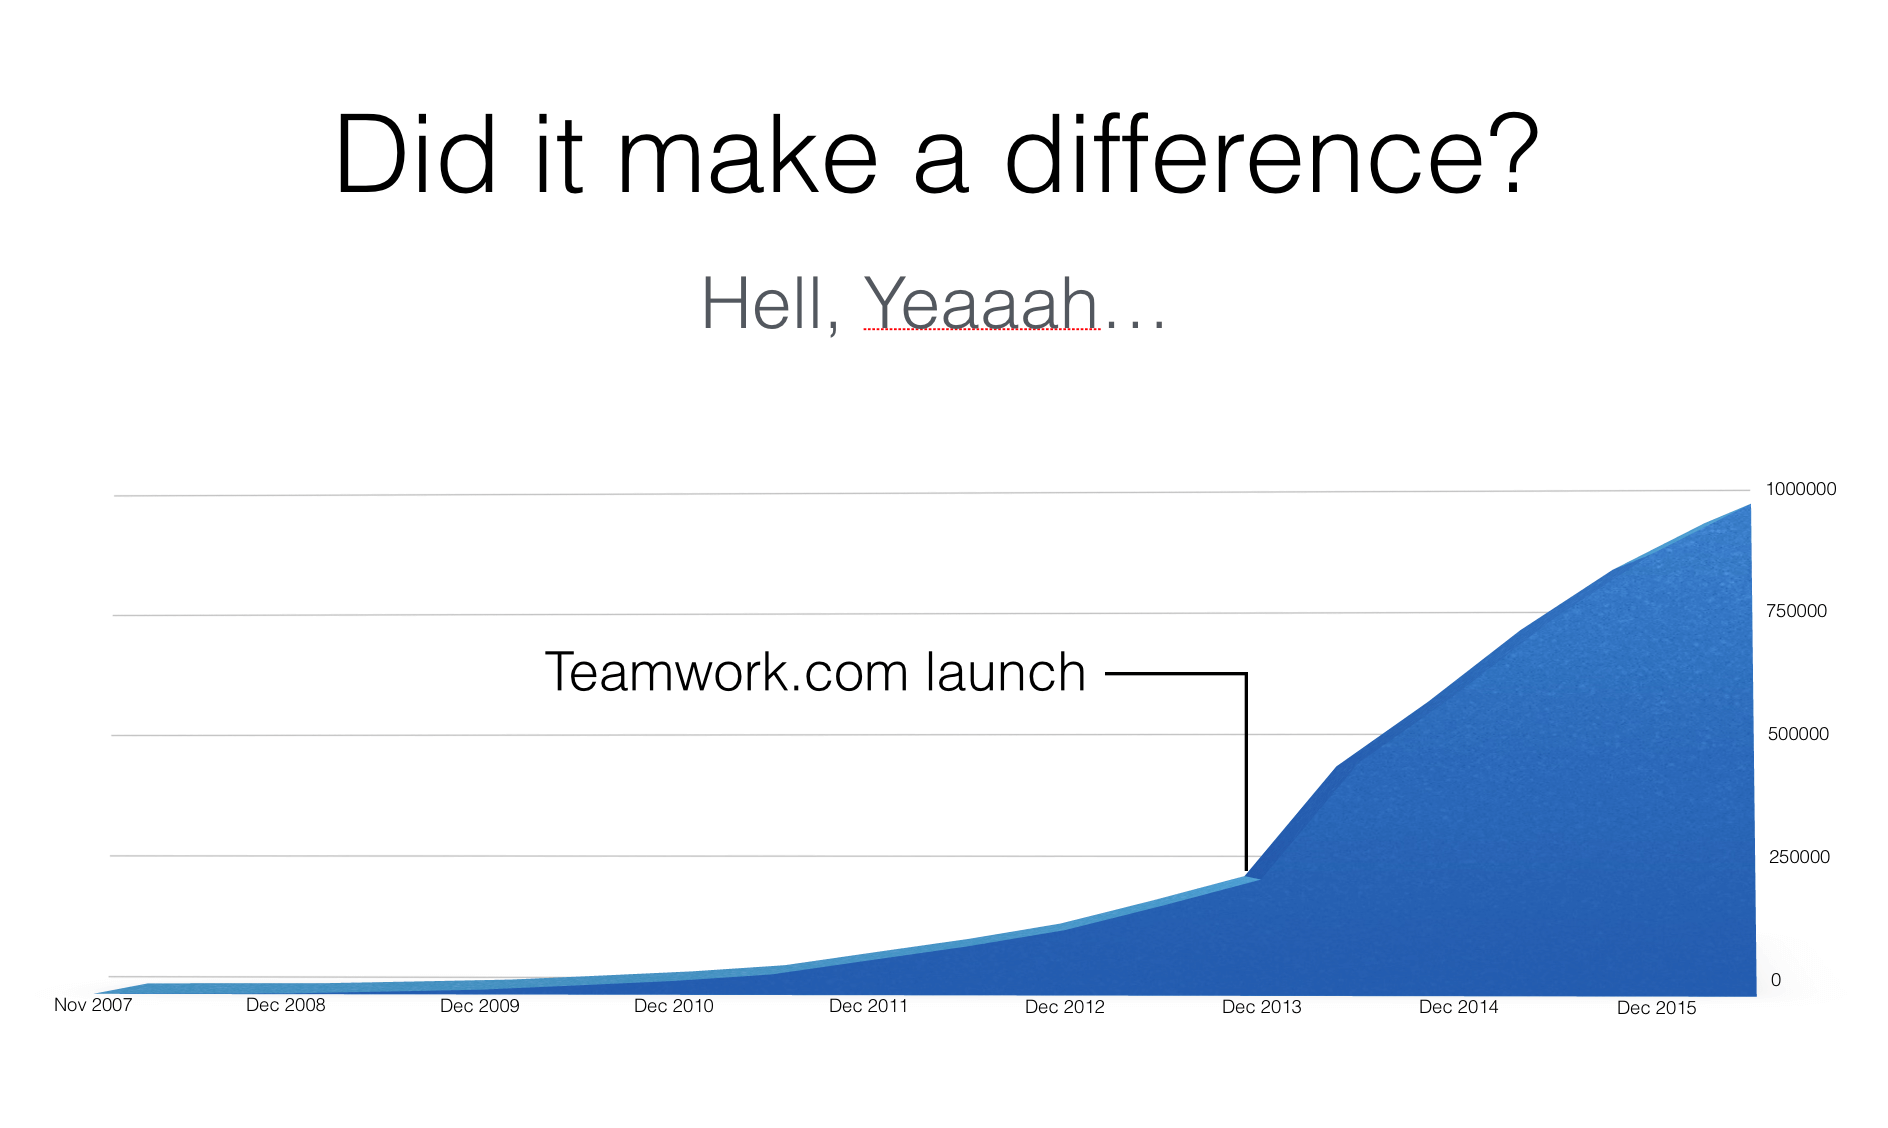 Teamwork.com growth numbers